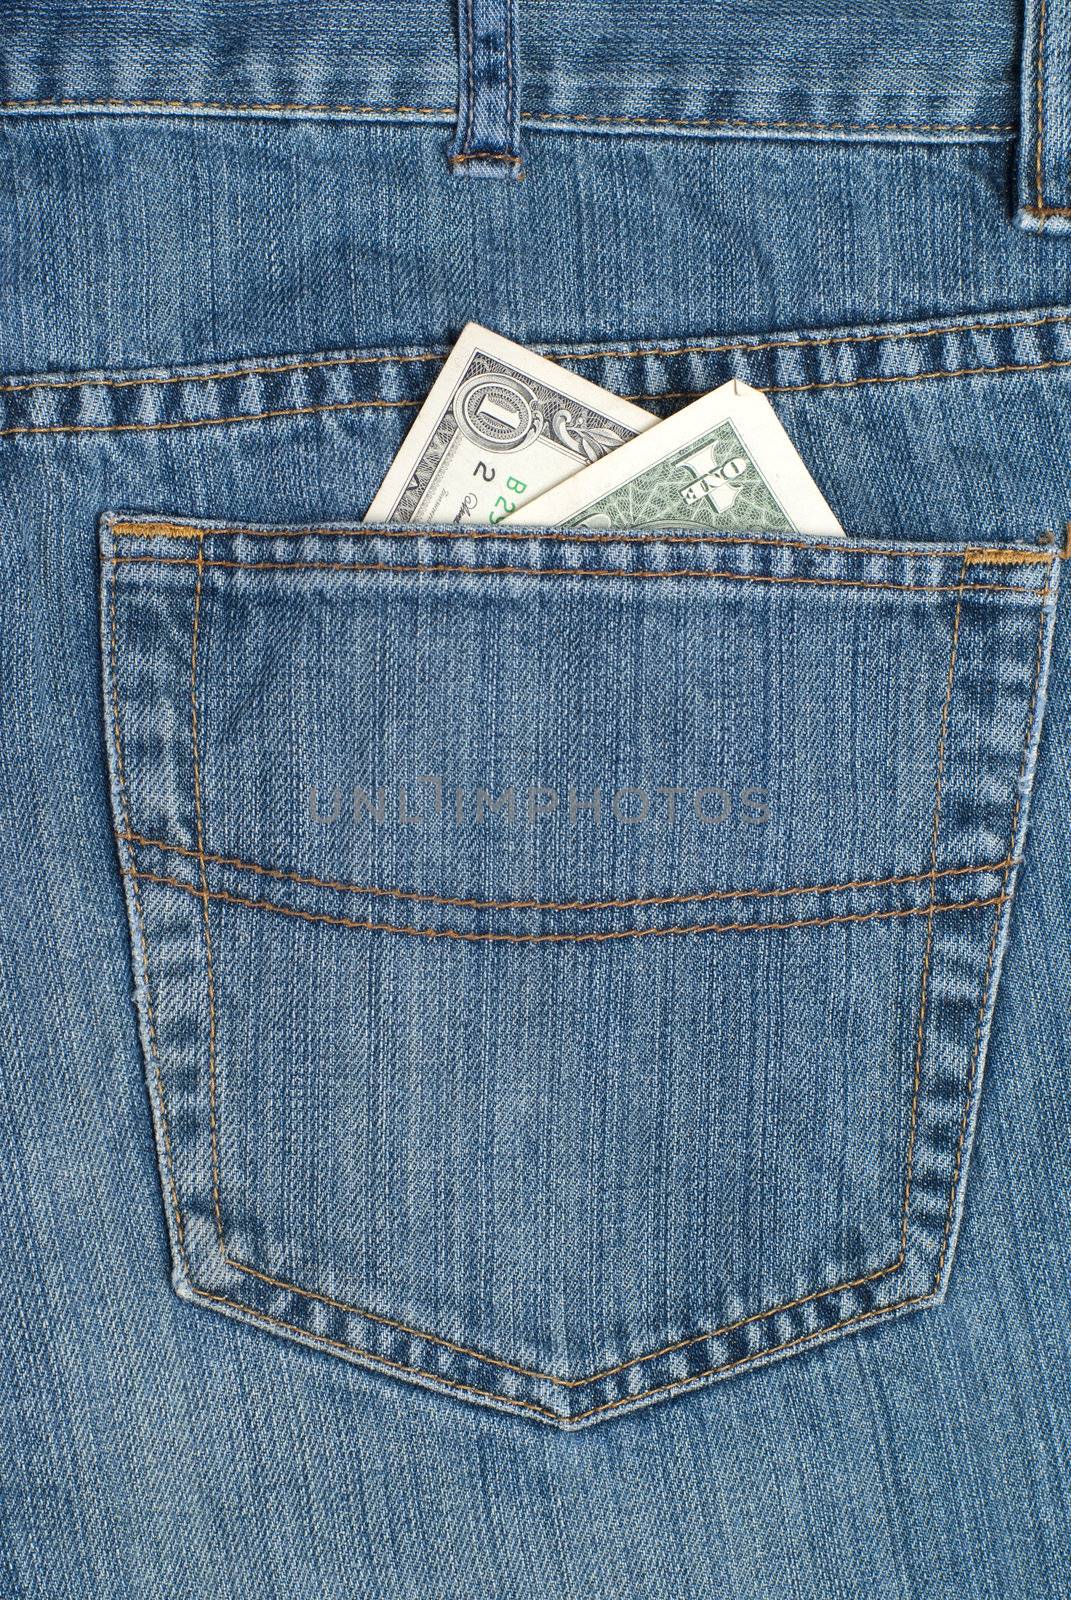 Blue jeans with one dollar by kozak